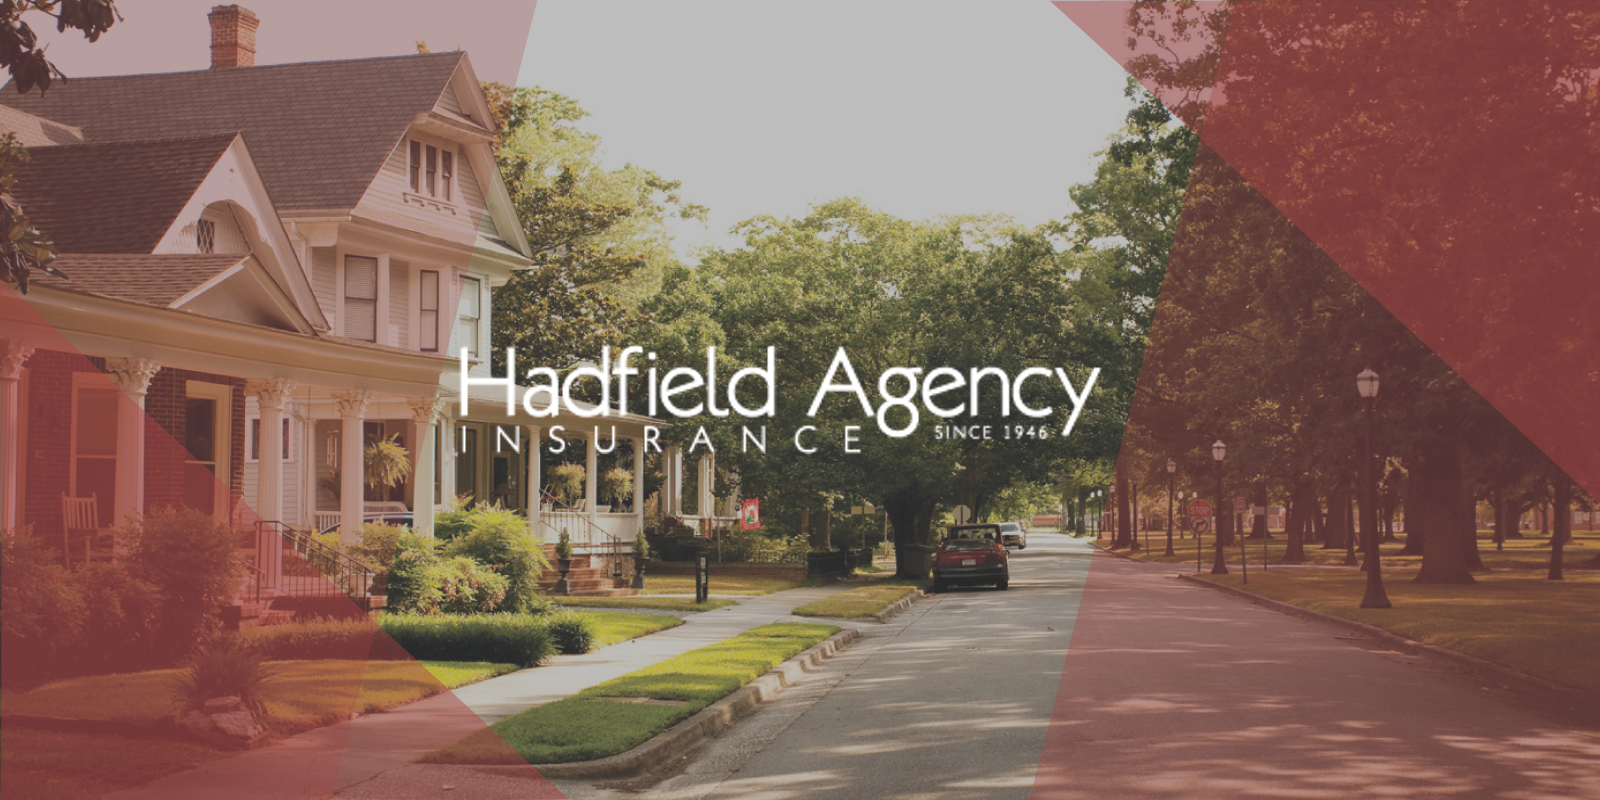 Hadfield Agency Inc